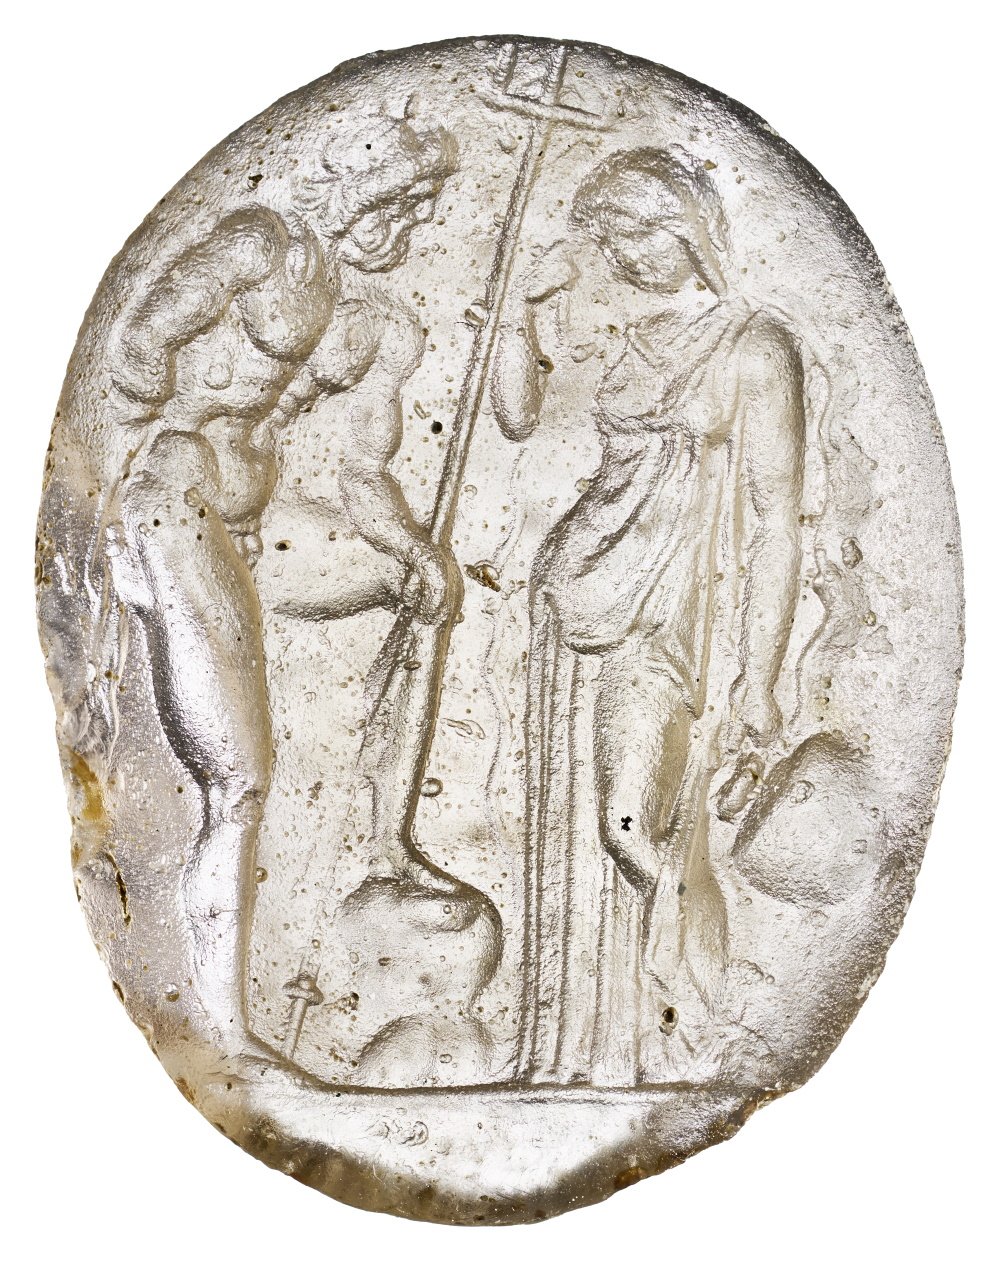 Amymone mit Poseidon (Museum August Kestner CC BY-NC-SA)